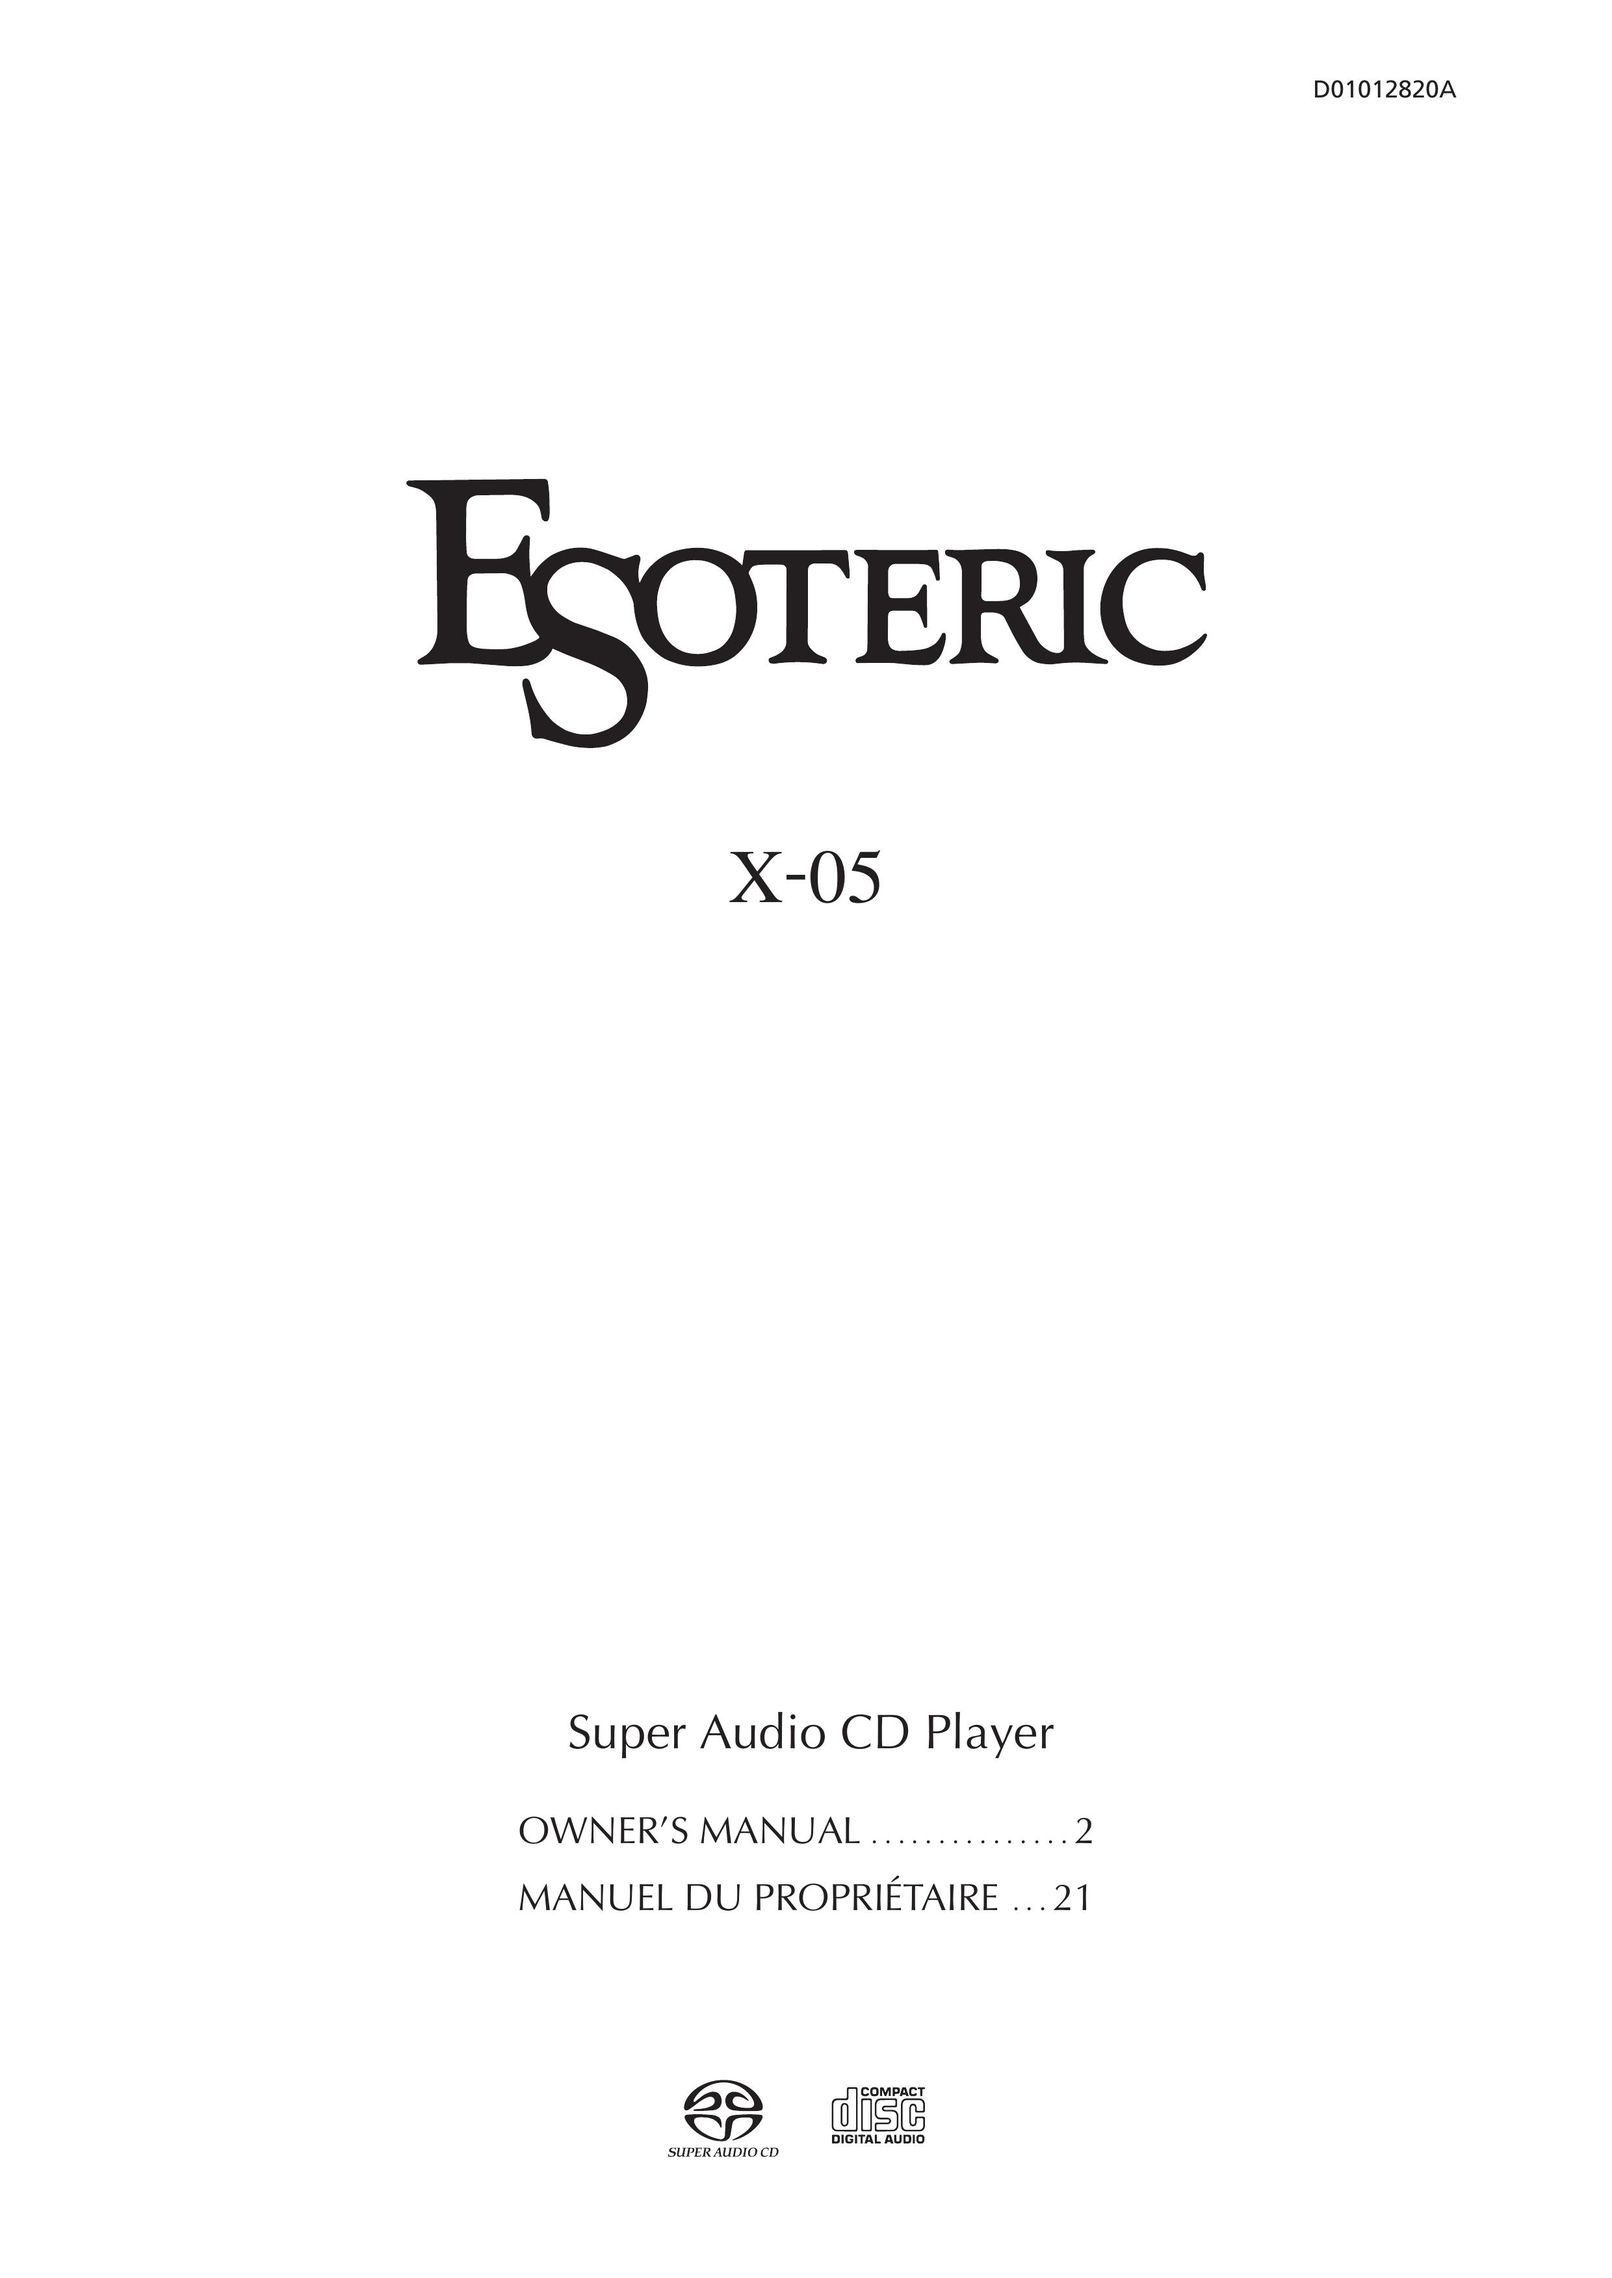 Esoteric X-05 CD Player User Manual